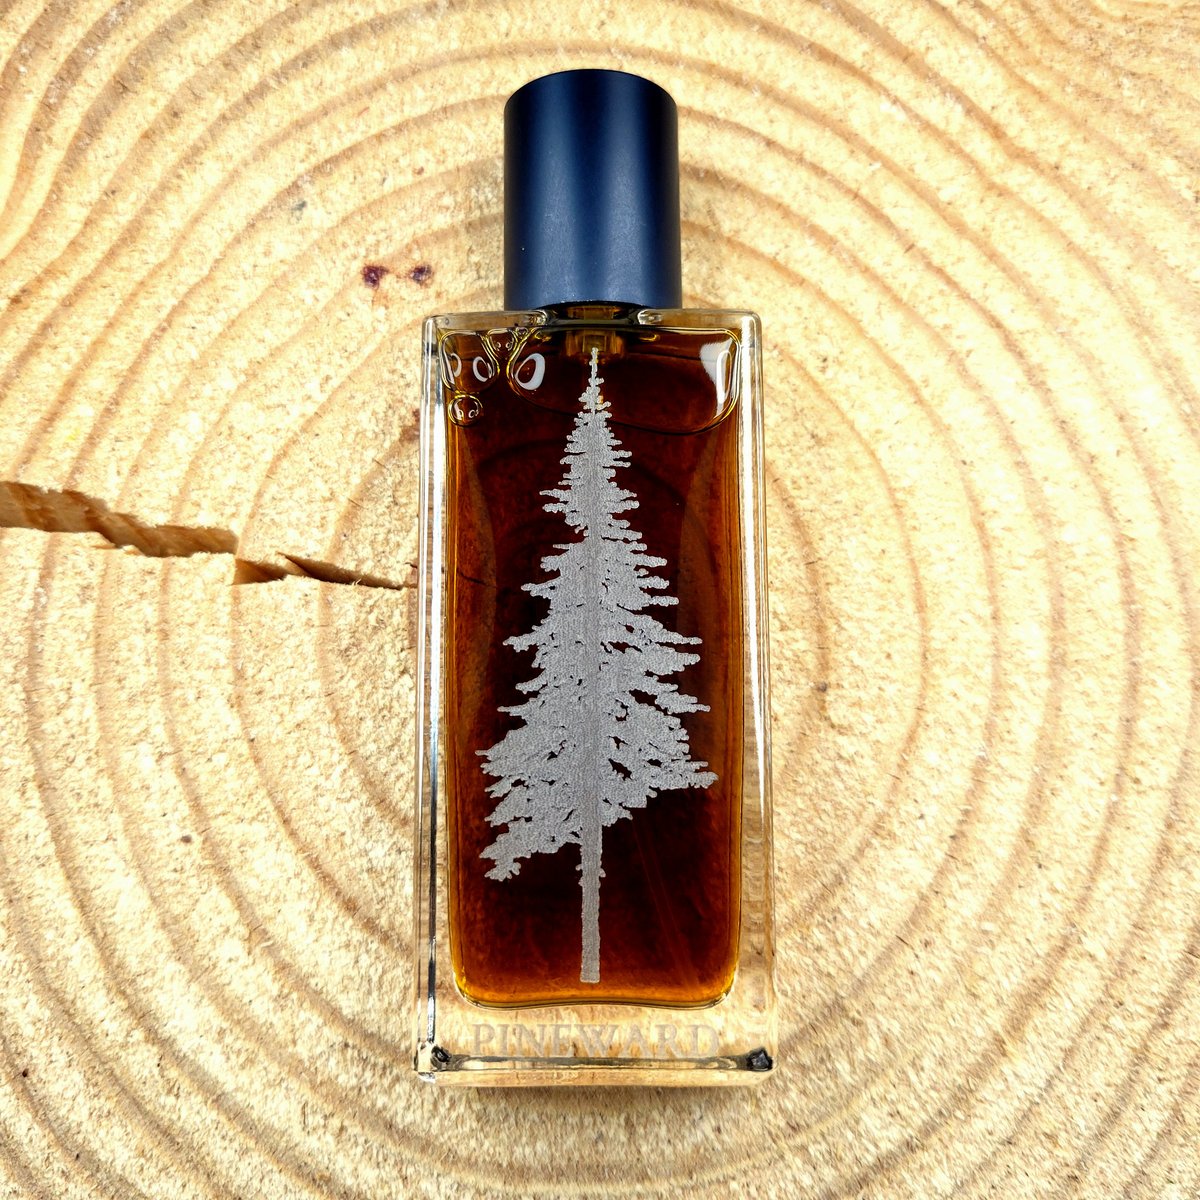 www.pinewardperfume.com